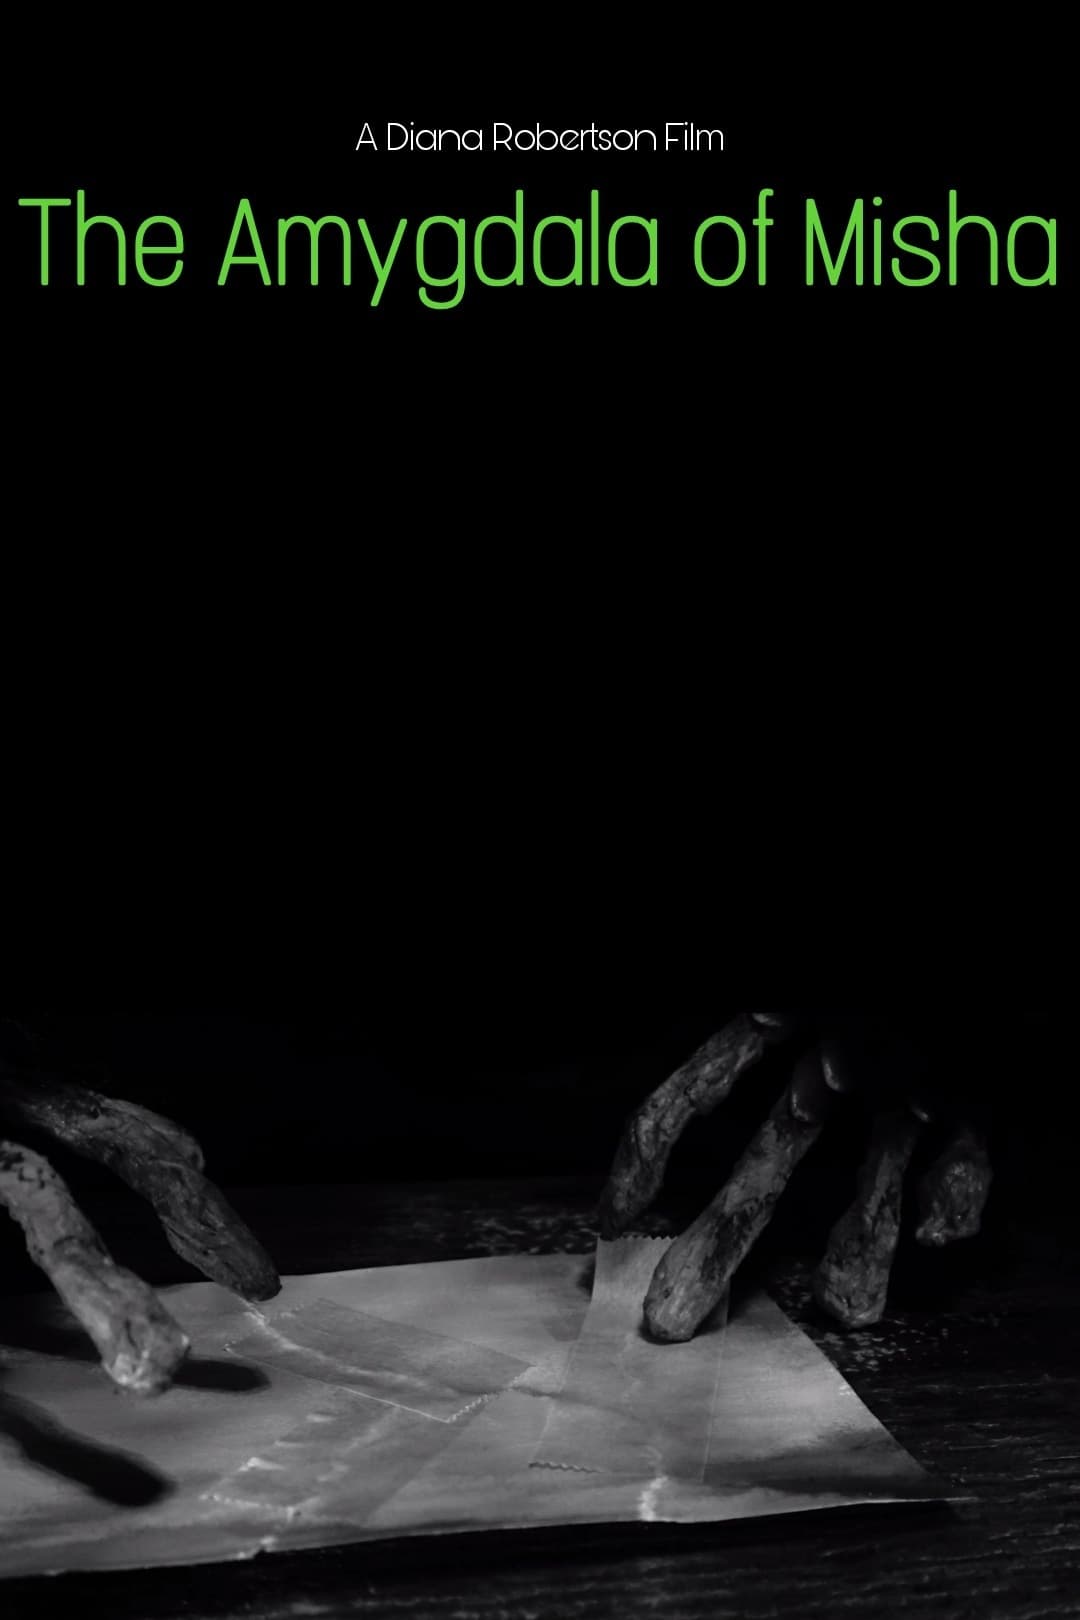 The Amygdala of Misha